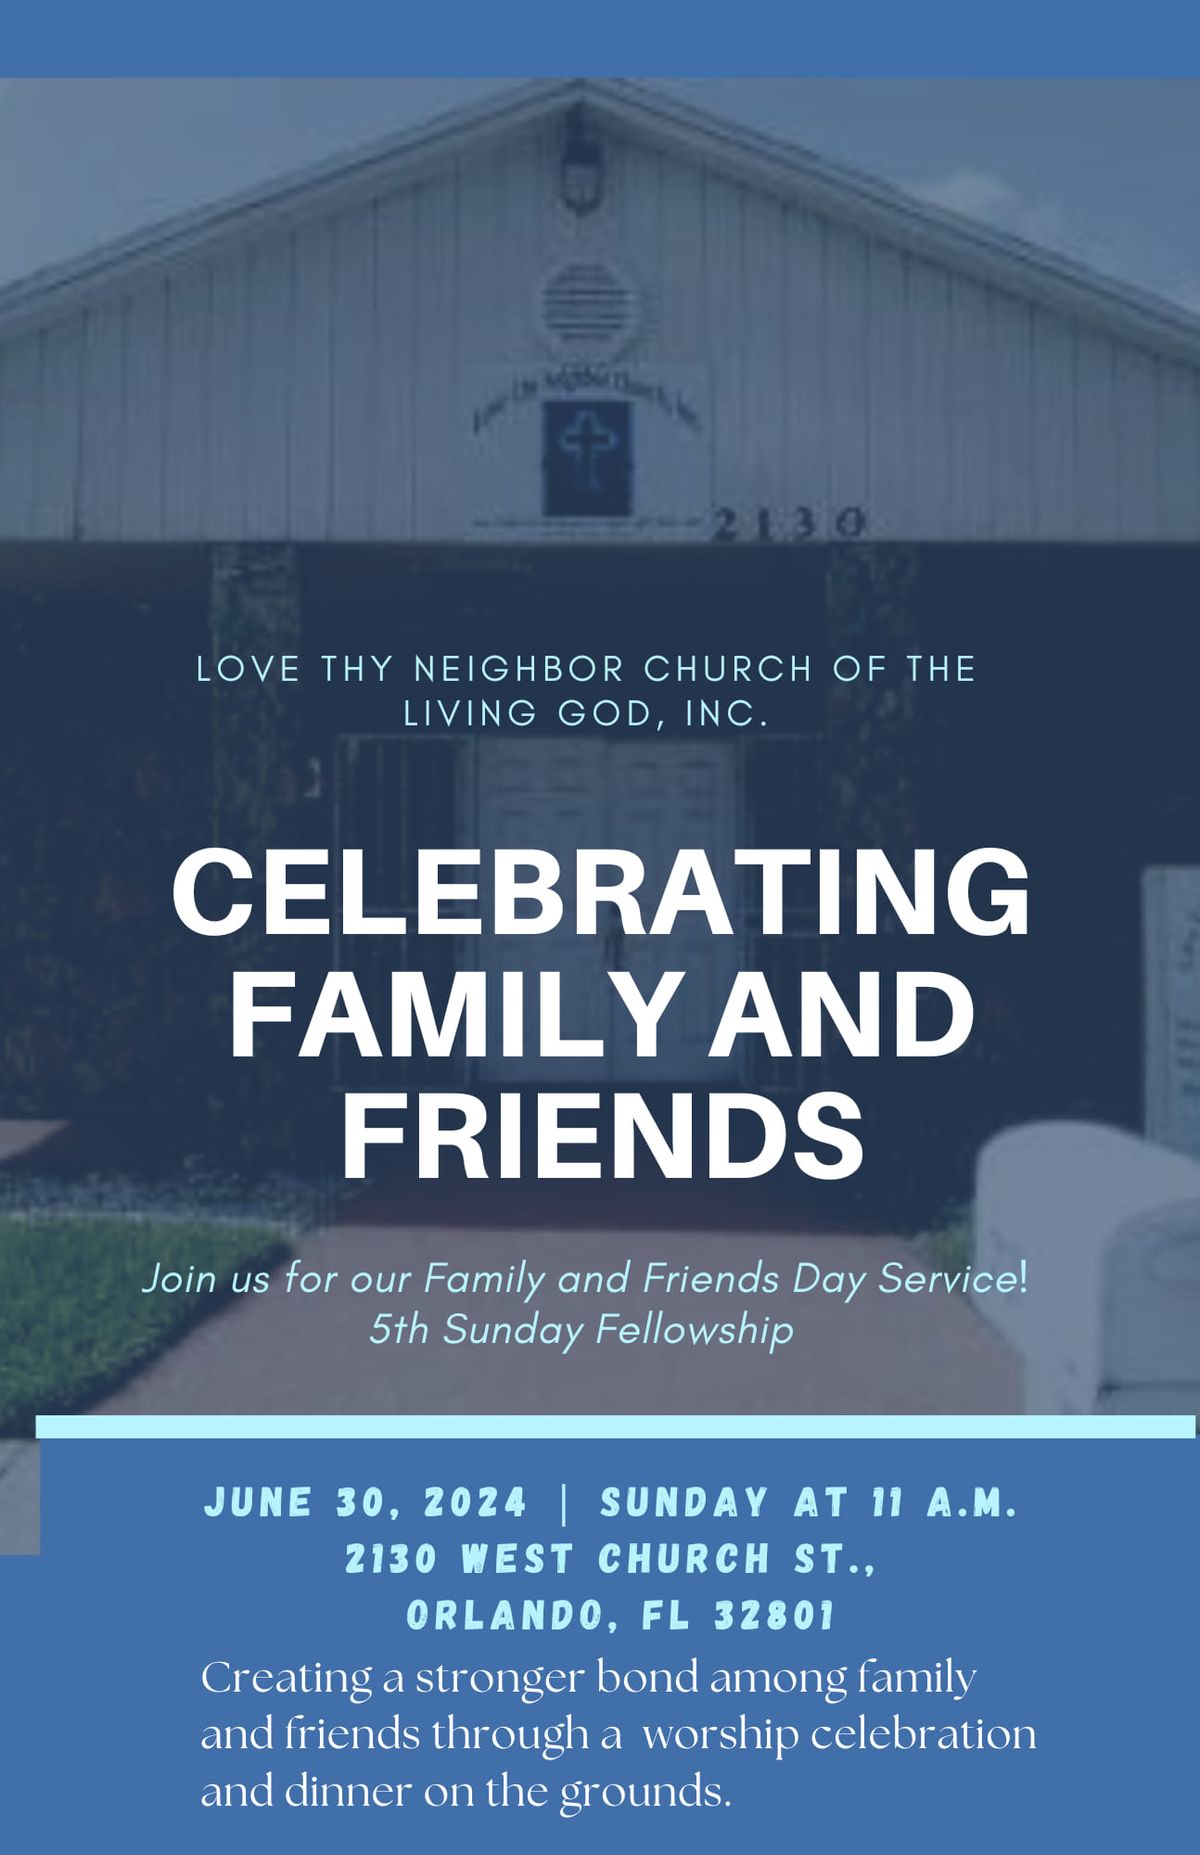 5th Sunday Fellowship